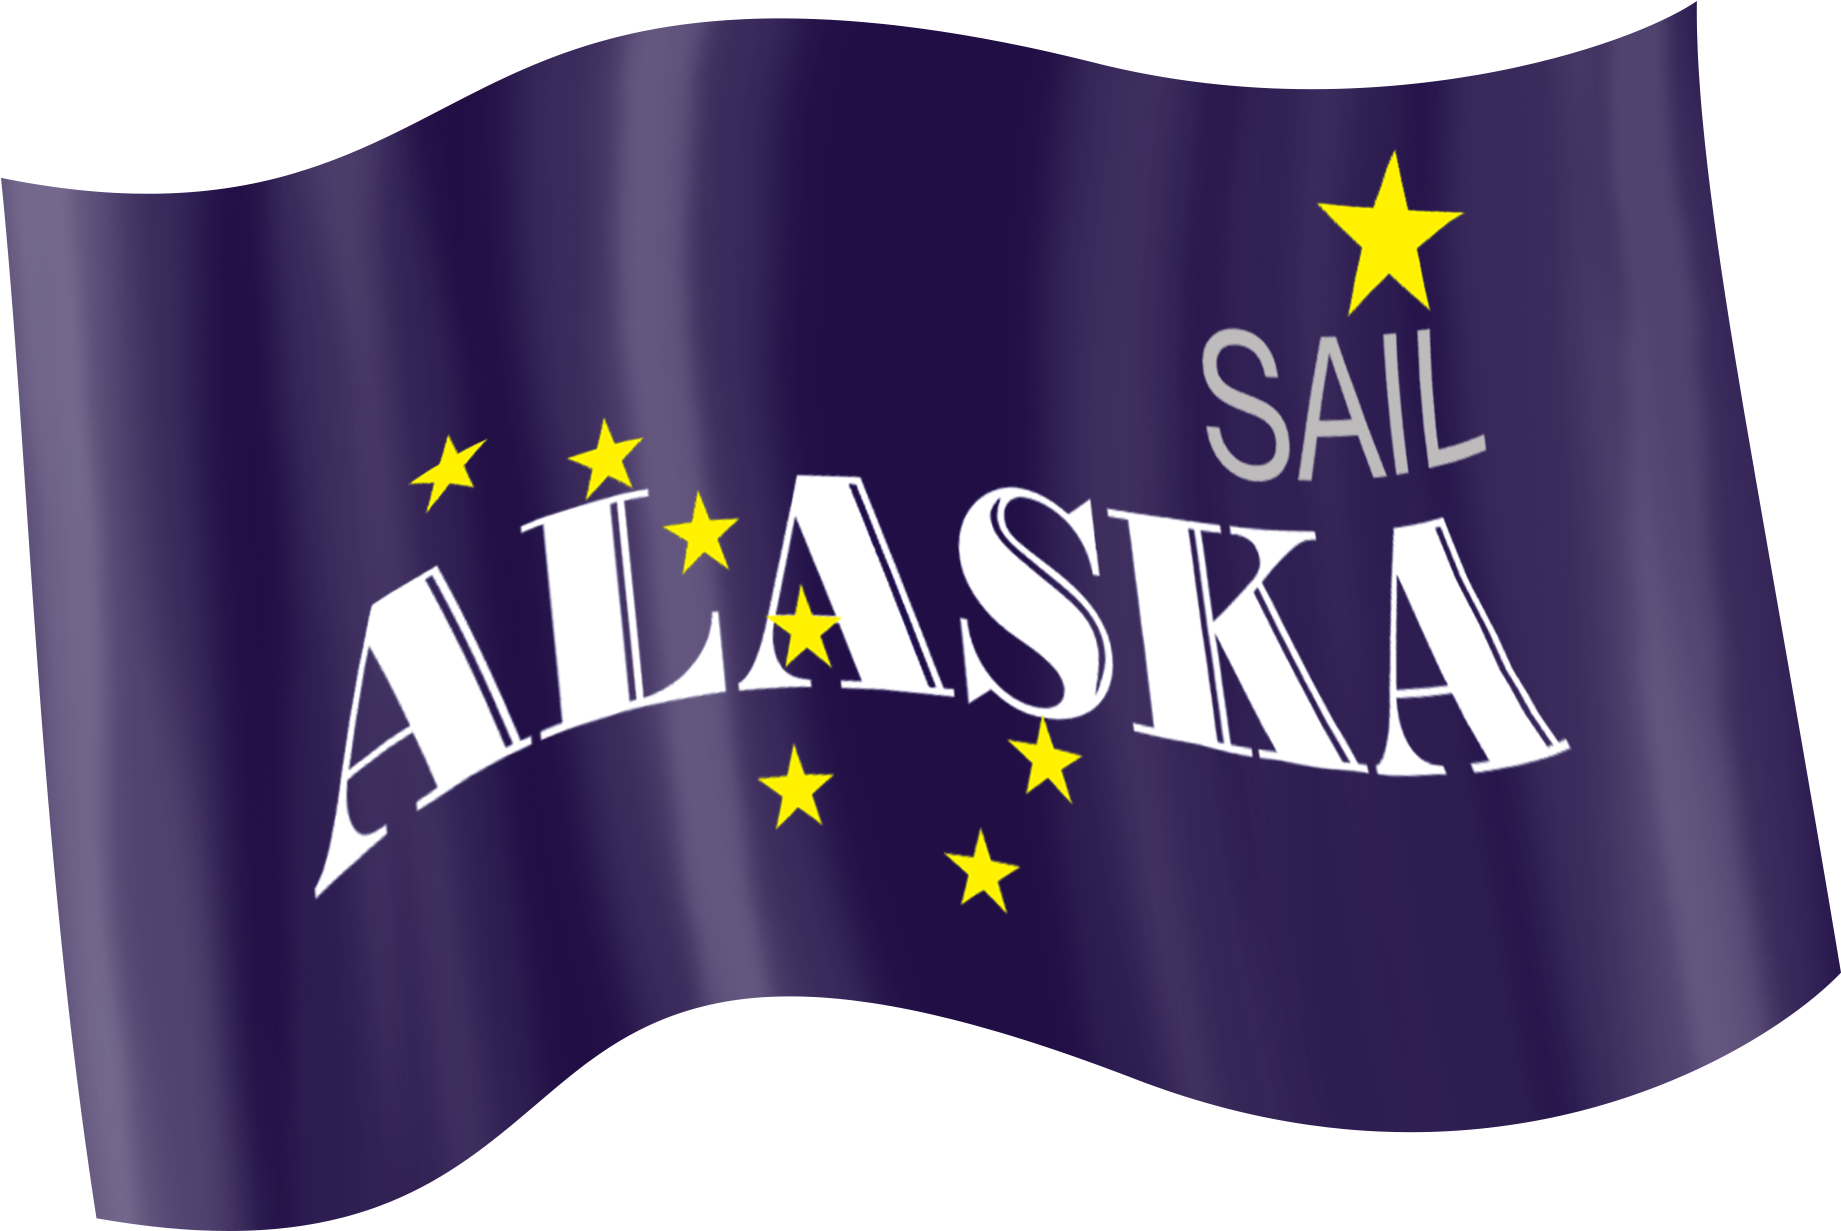 Sail Alaska Promotional Flag PNG image